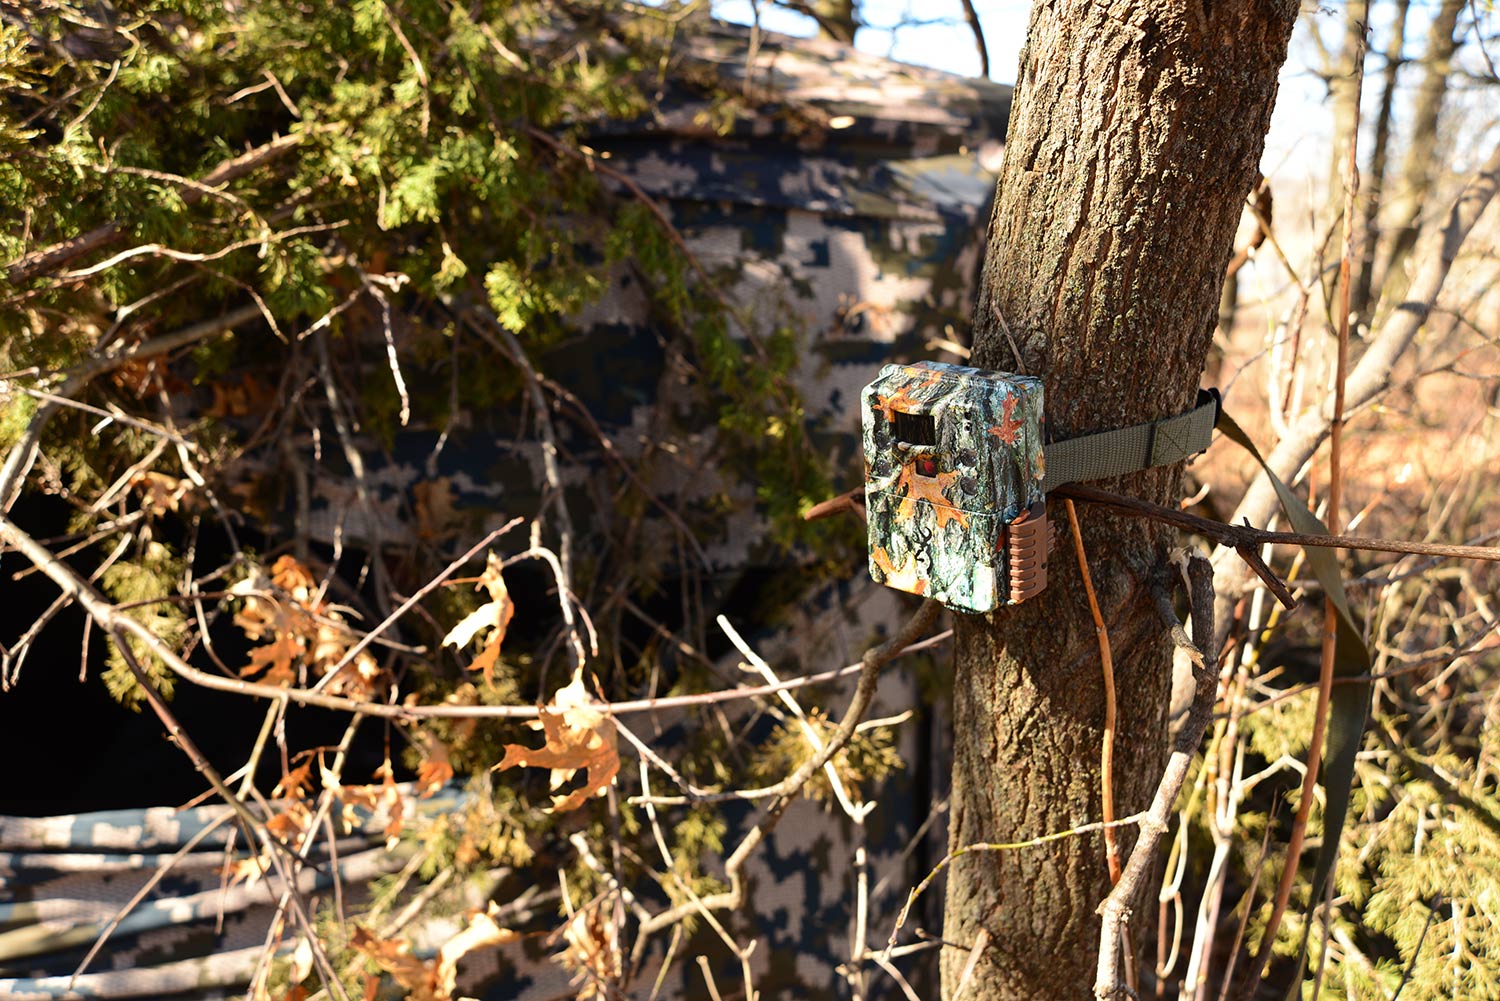 A trail camera on a tree.